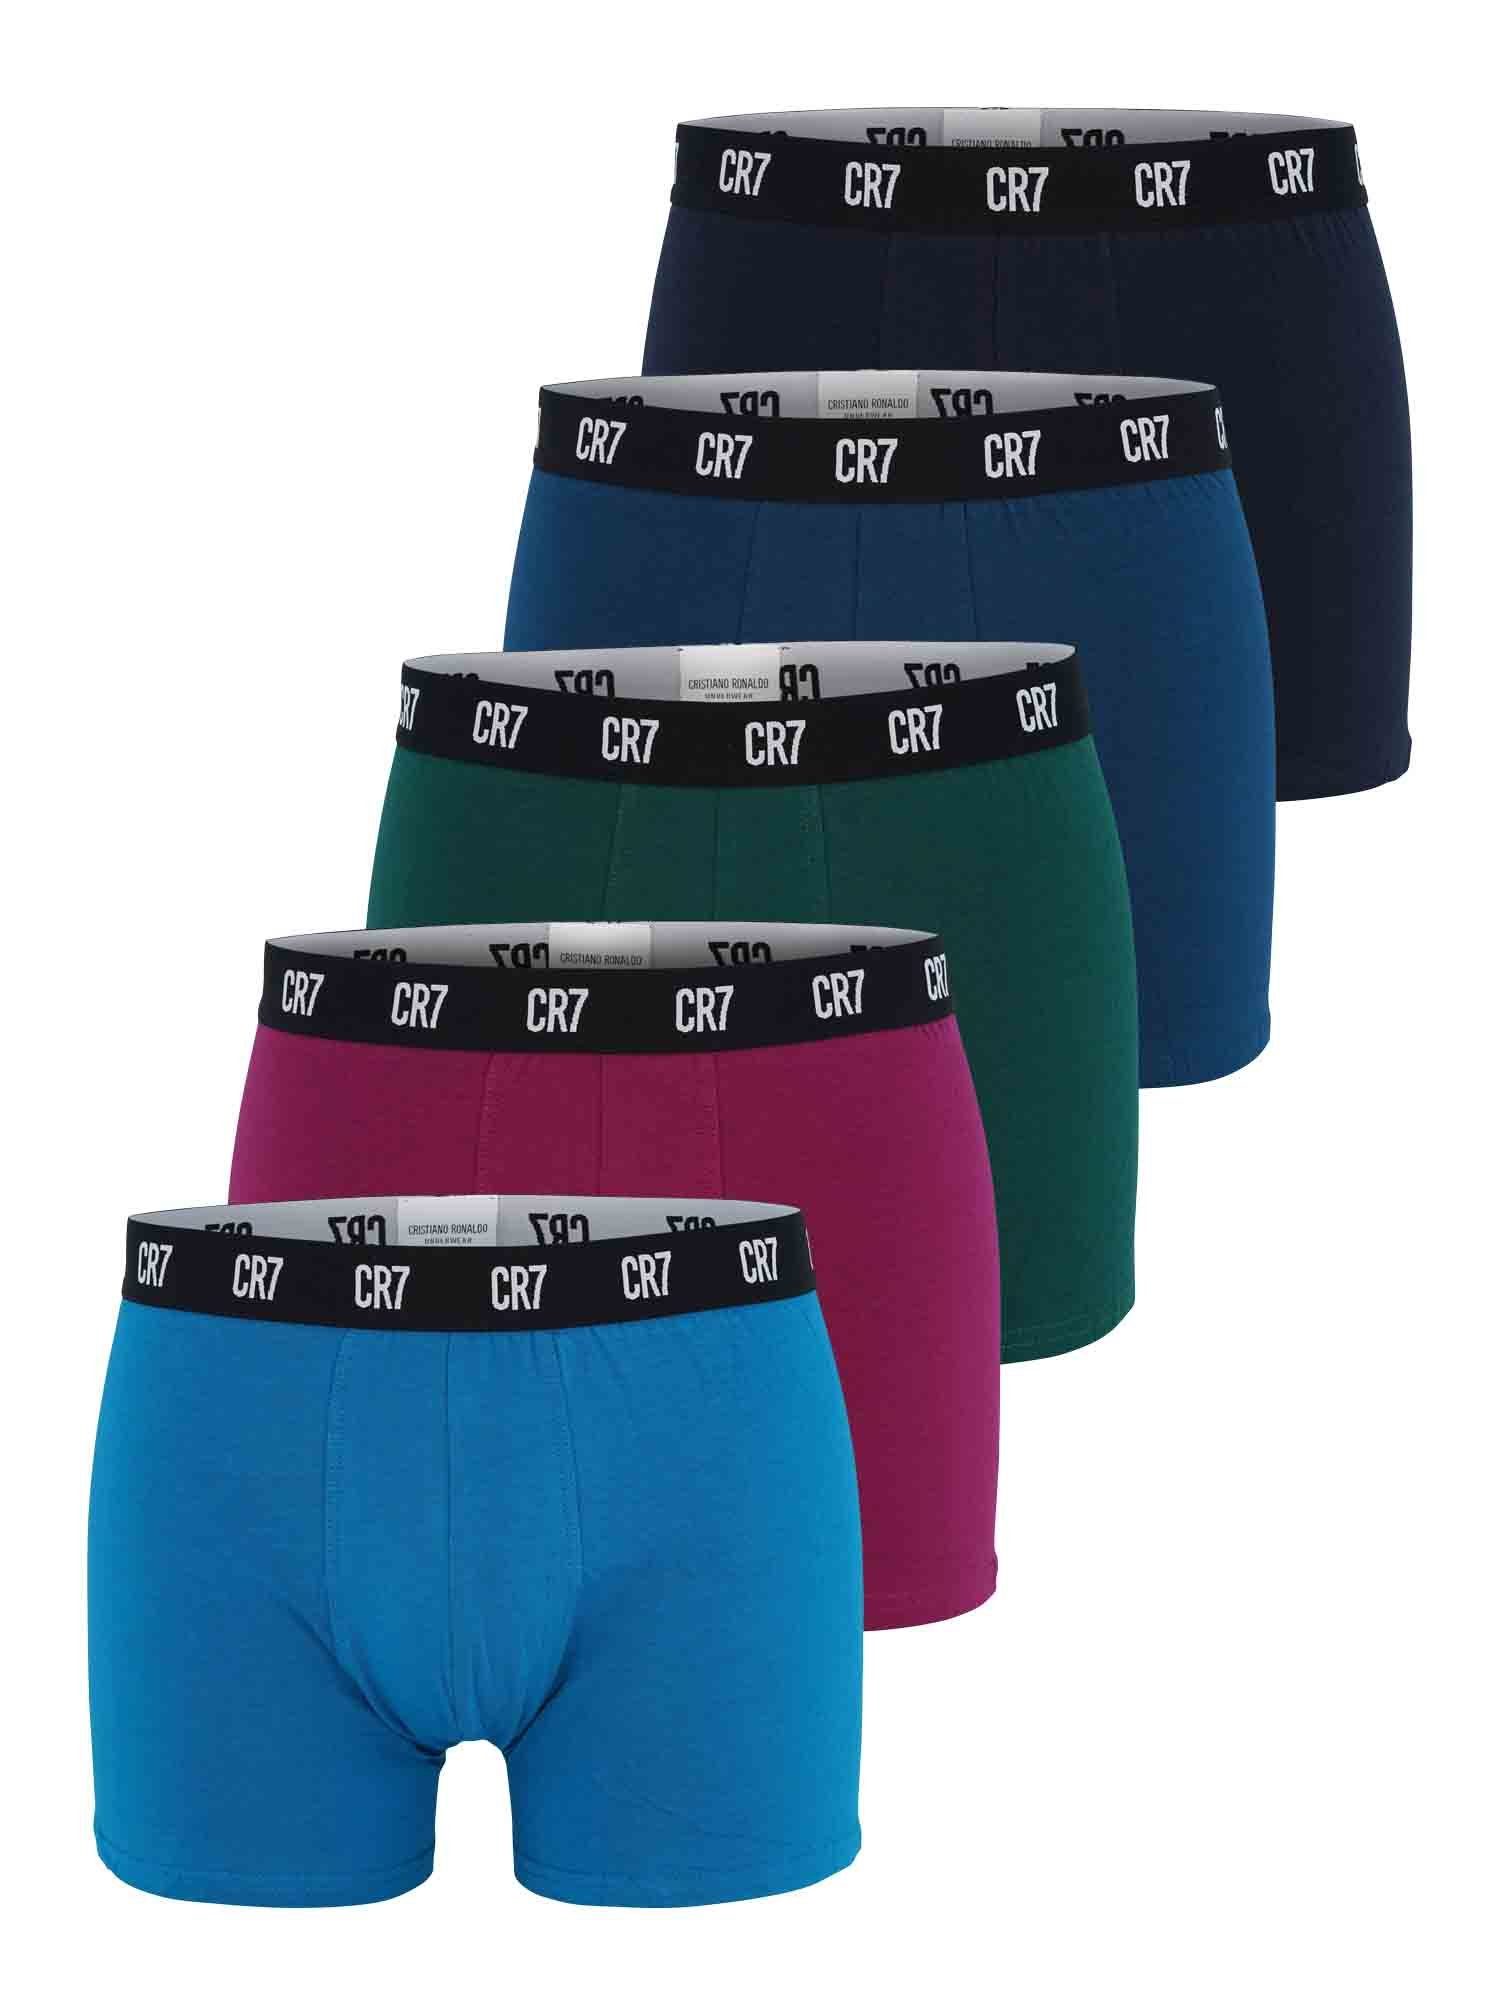 CR7 Retro Pants Herren Männer Boxershorts Retro Pants Trunks Multipack (5-St) Multi 7 | Unterhosen